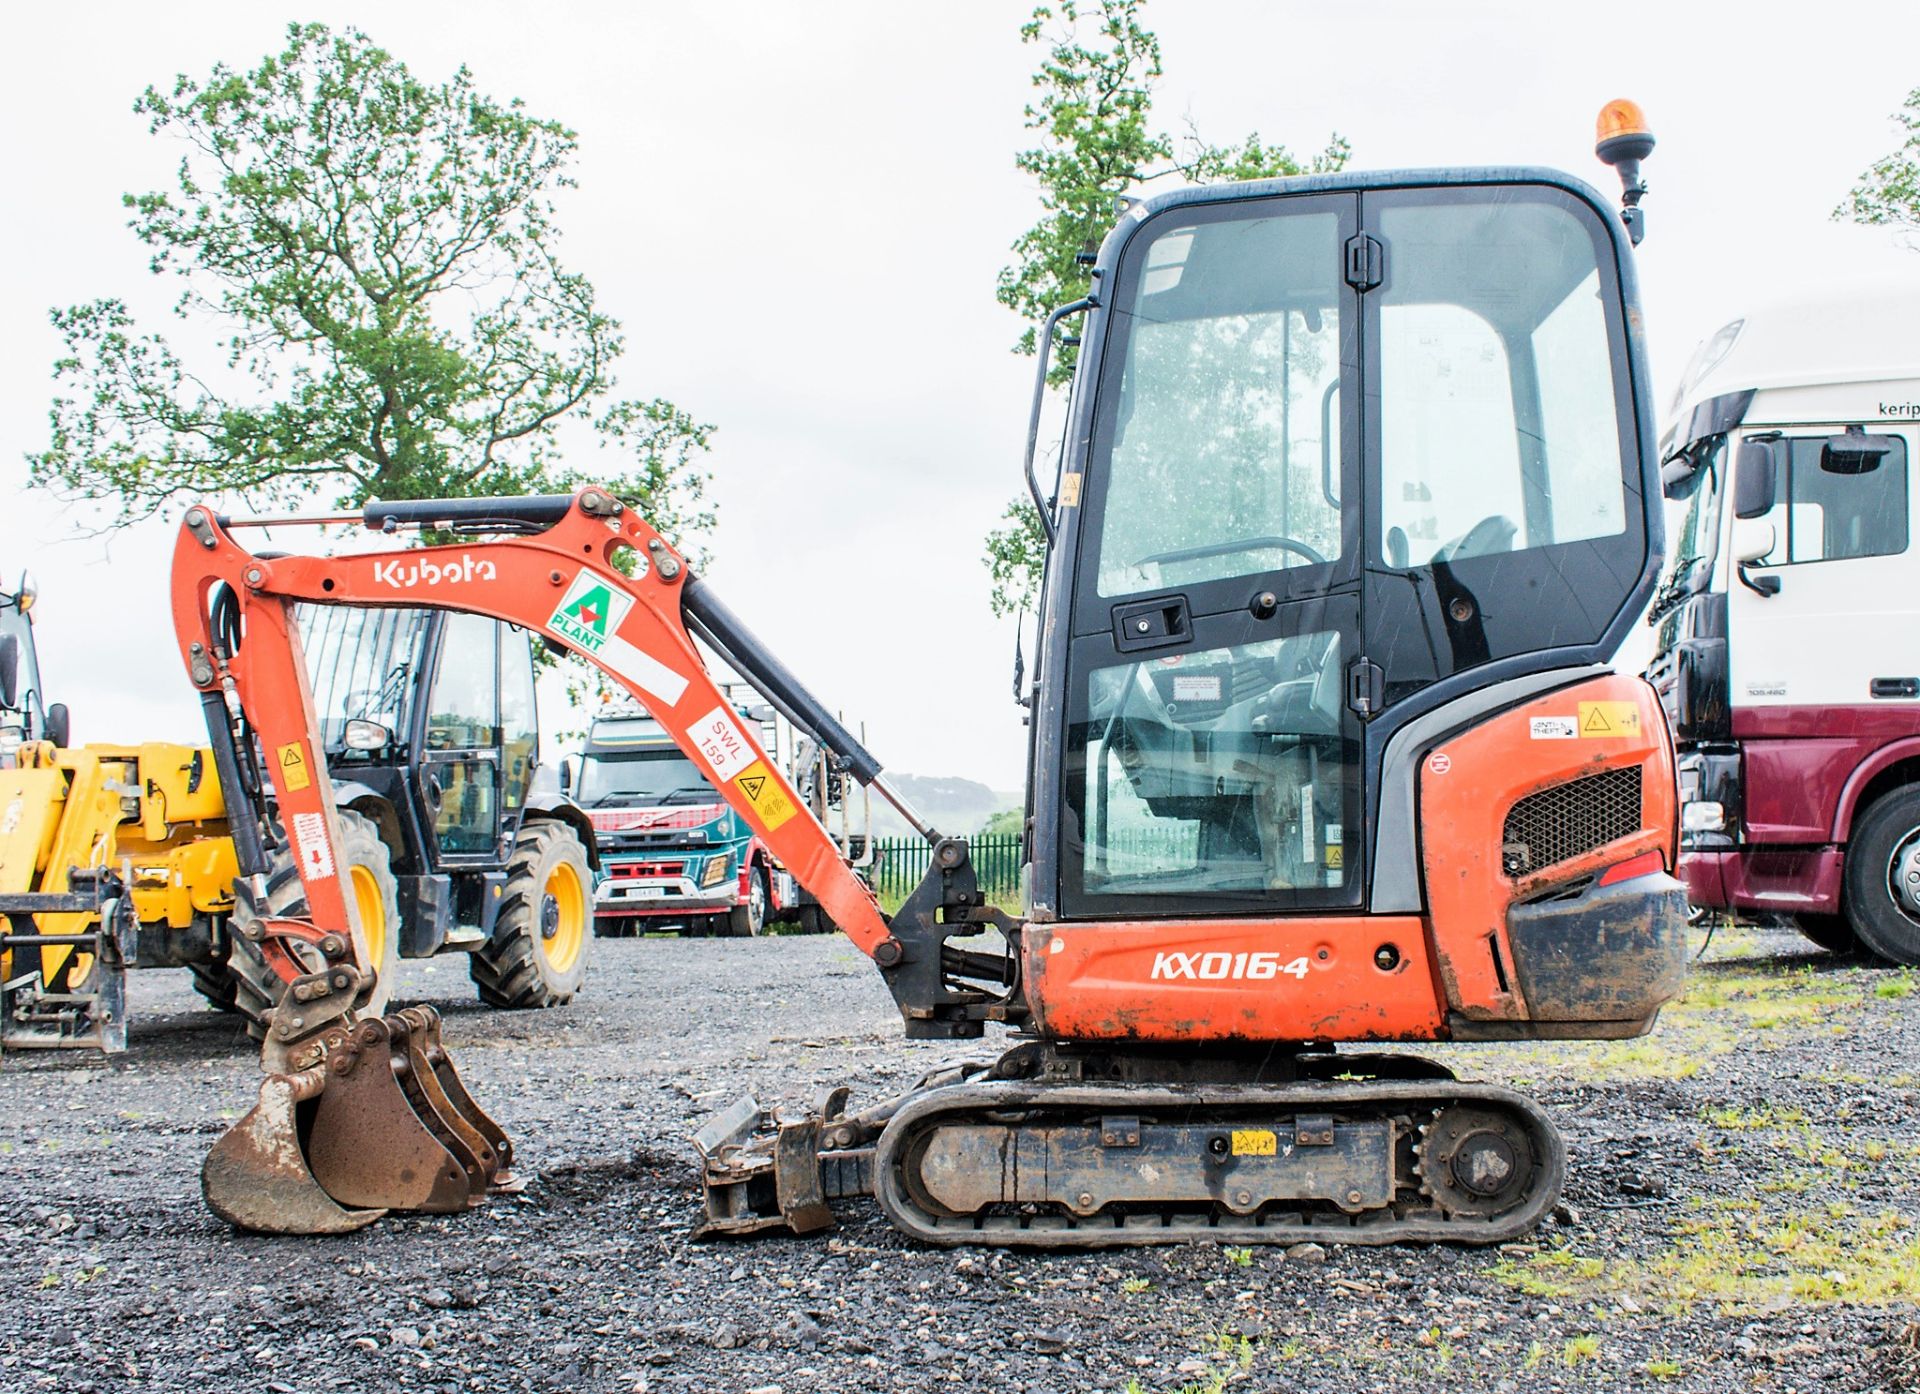 Kubota KX016-4 1.6 tonne rubber tracked mini excavator Year: 2014 S/N: 57528 Recorded Hours: 2621 - Image 8 of 19